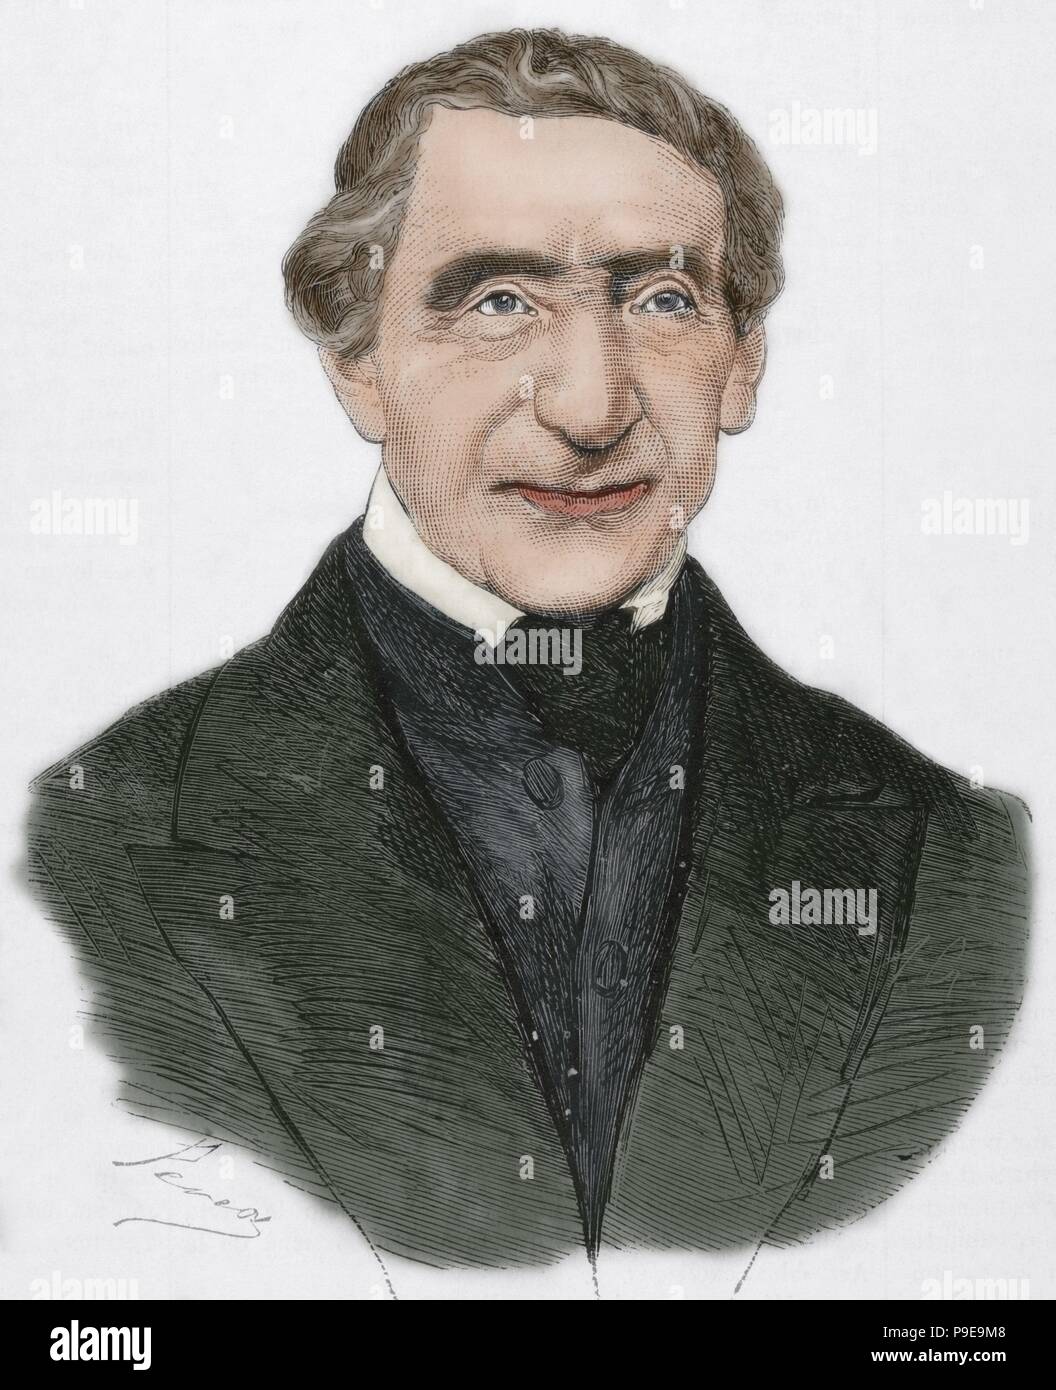 Johann Ignaz von Dollinger (1799-1890). German theologian and historian. Portrait. Engraving by Arturo Carretero. 'La Ilustracion Espanola y Americana', 1872. Colored. Stock Photo